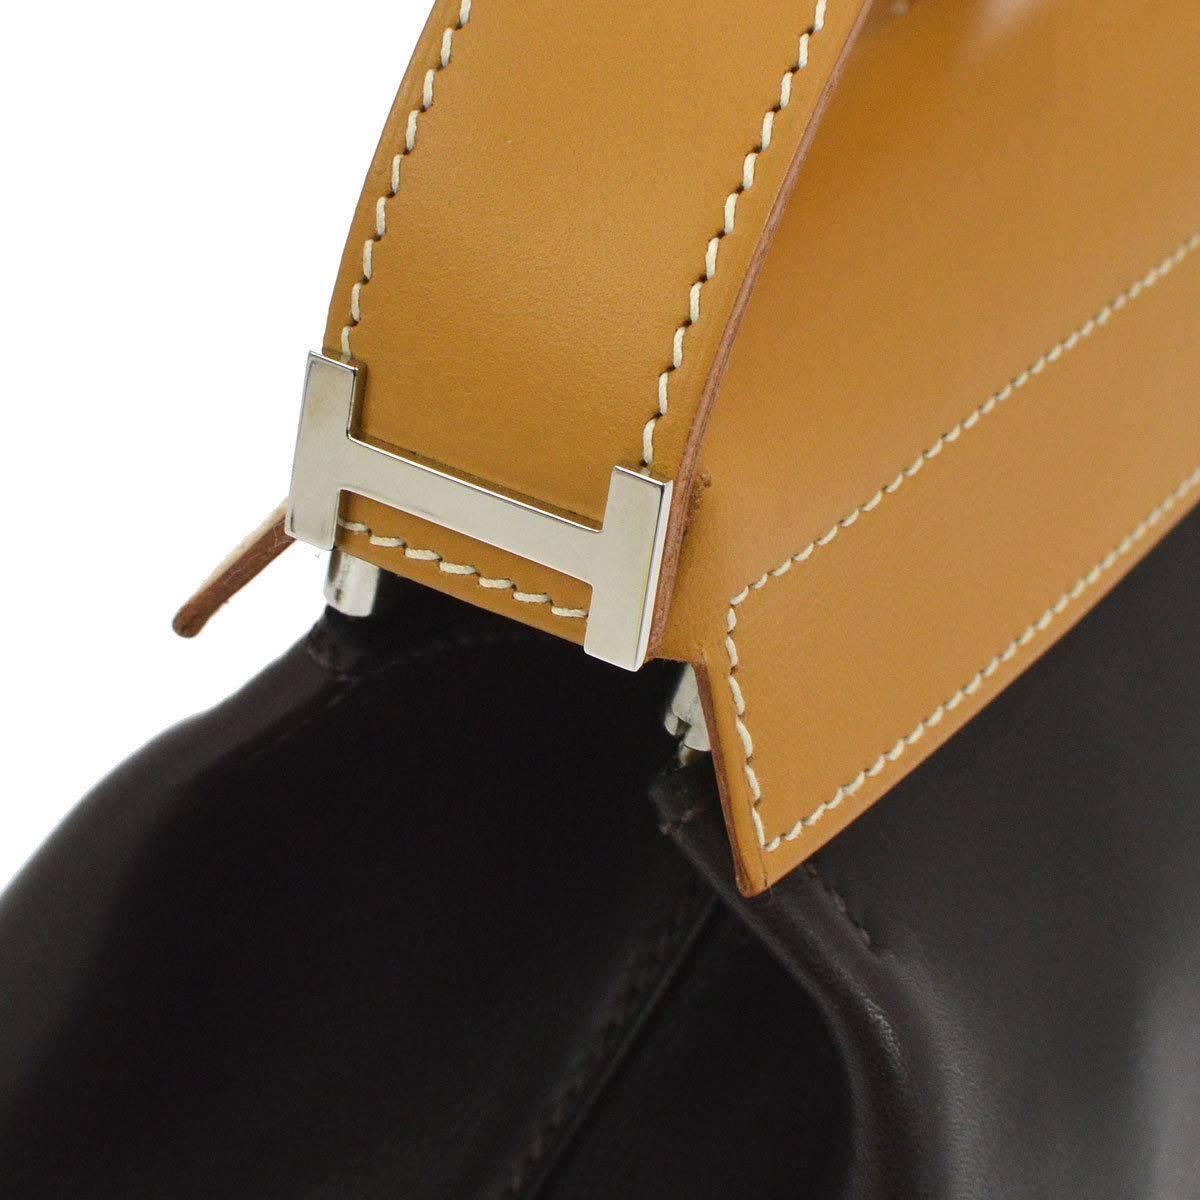 Hermes Black Cognac Leather Palladium 'H' Top Handle Evening Shoulder Bag

Leather
Palladium hardware
Zipper closure 
Made in France
Measures 12.5